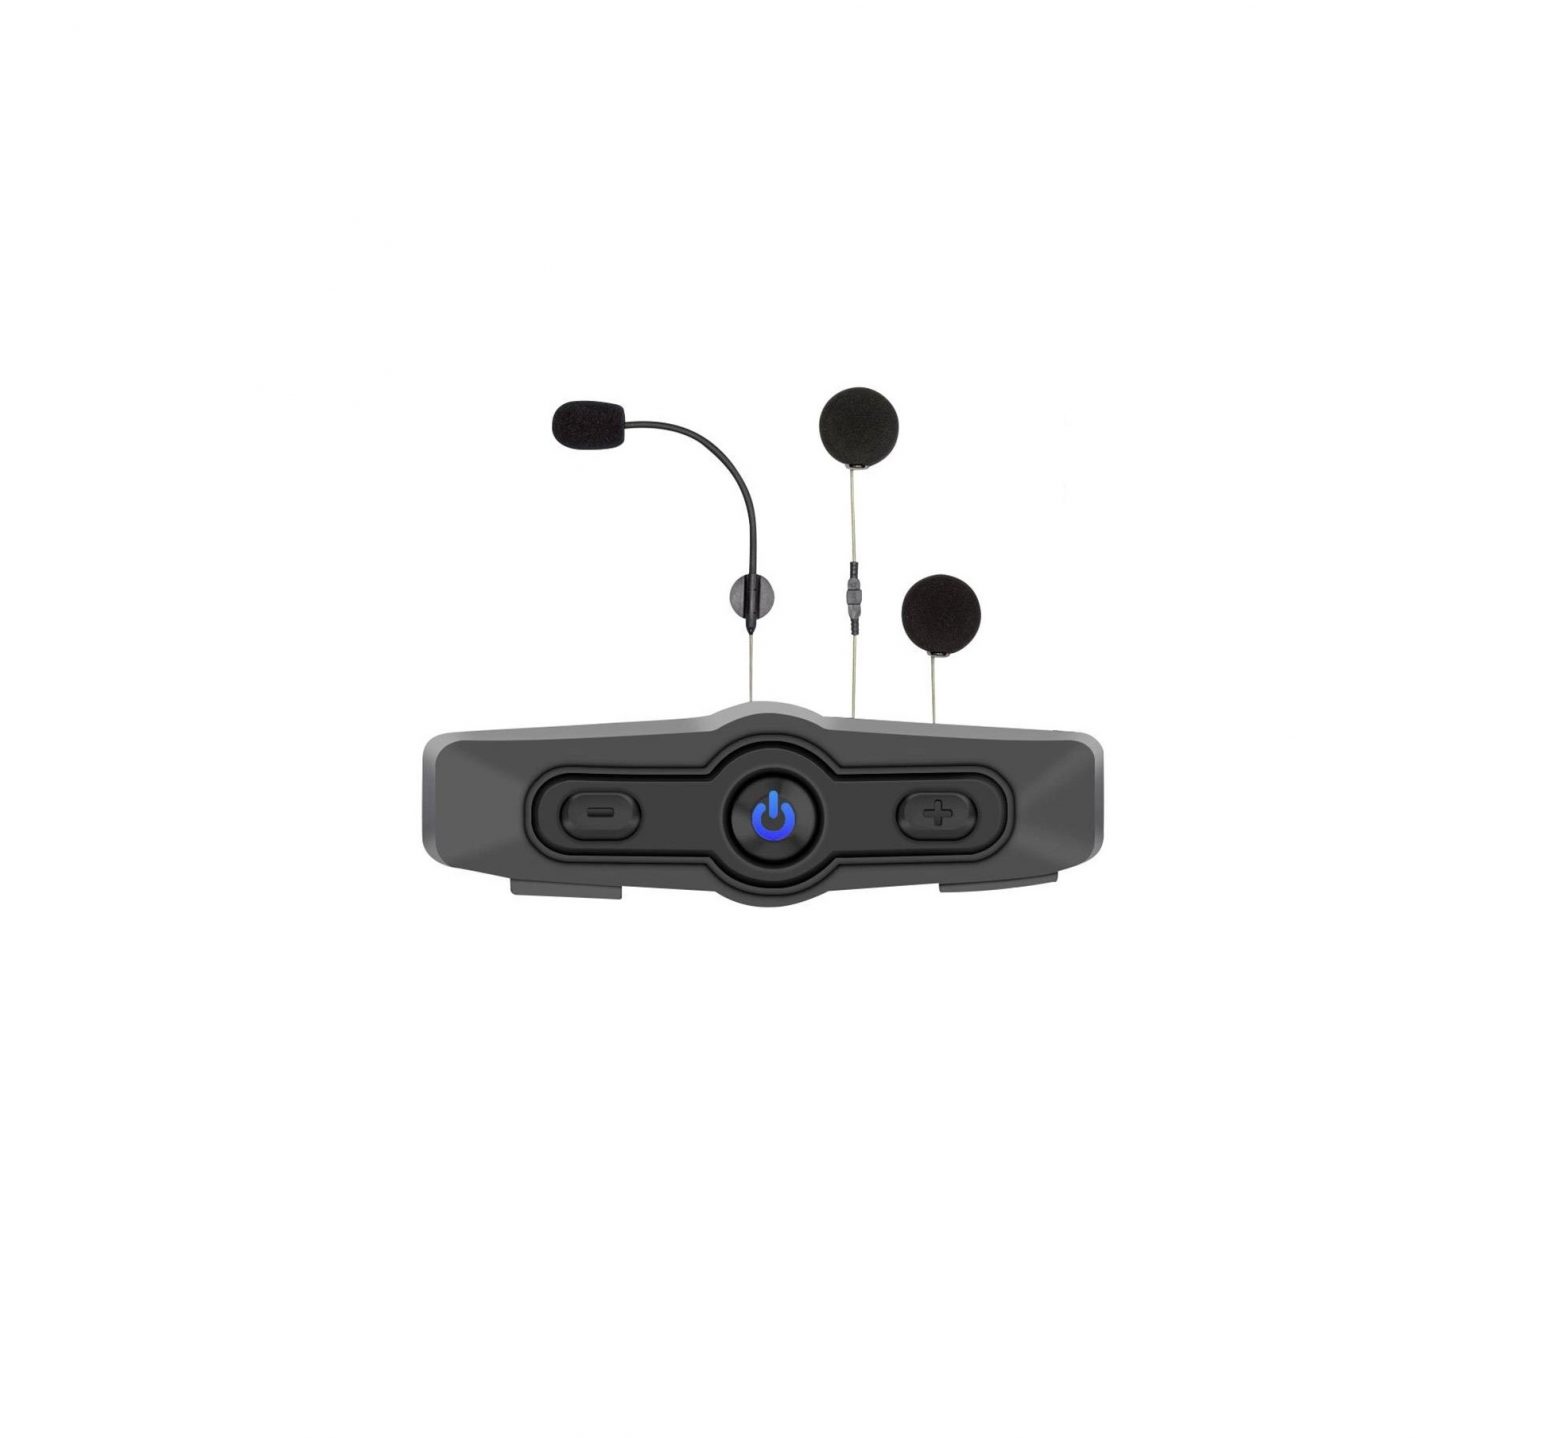 ALBRECHT Bluetooth Adapter Communication Audio Reception On Motorbikes Instructions